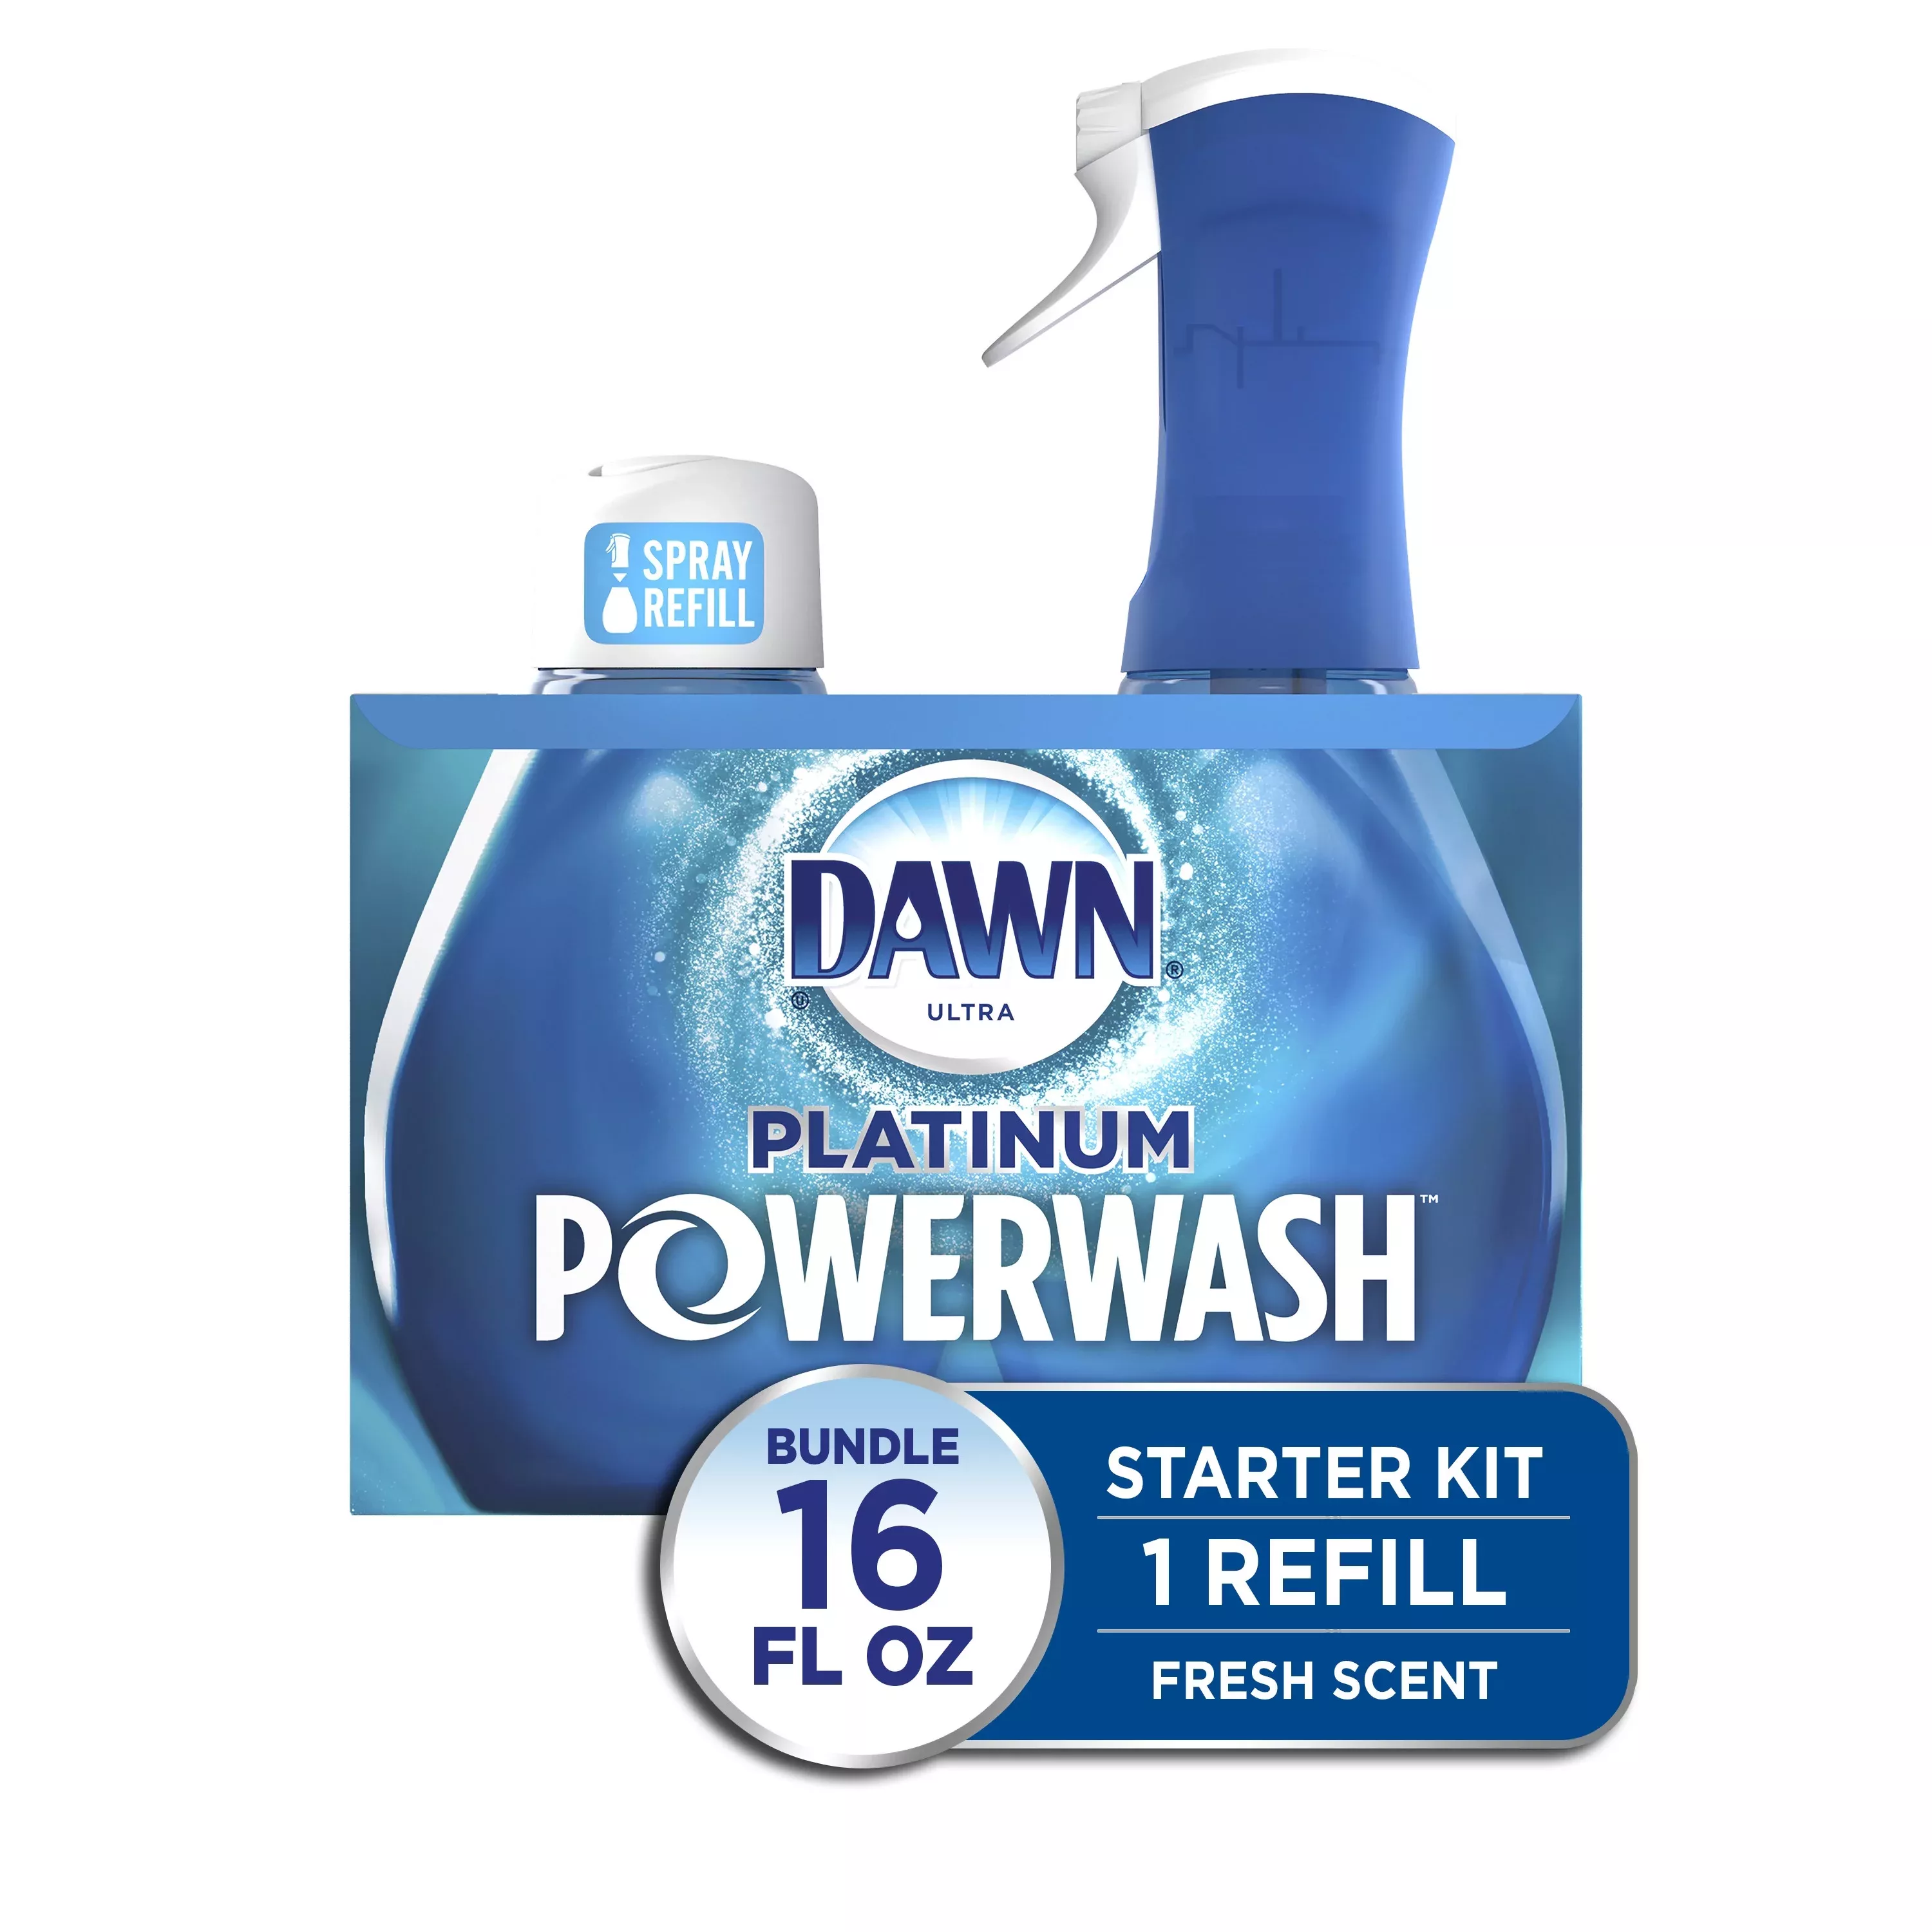 Dawn Free & Clear Power Wash Dish Spray, Dish Soap, Pear Scent